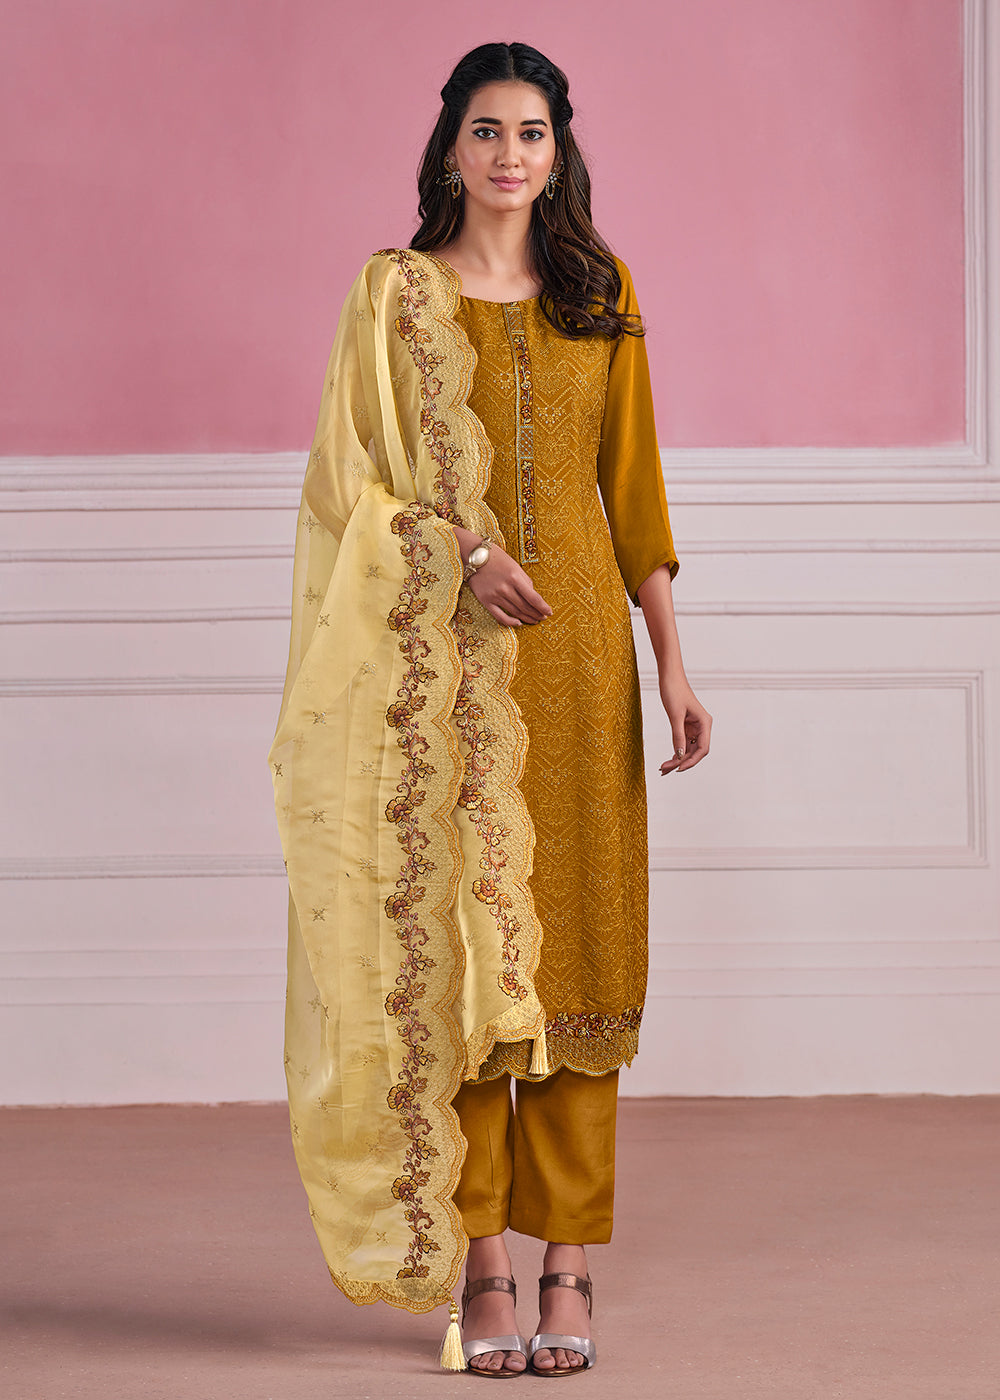 Buy Now Mustard Chinnon Chiffon Chikankari Embroidered Salwar Suit Online in USA, UK, Canada, Germany, Australia & Worldwide at Empress Clothing. 